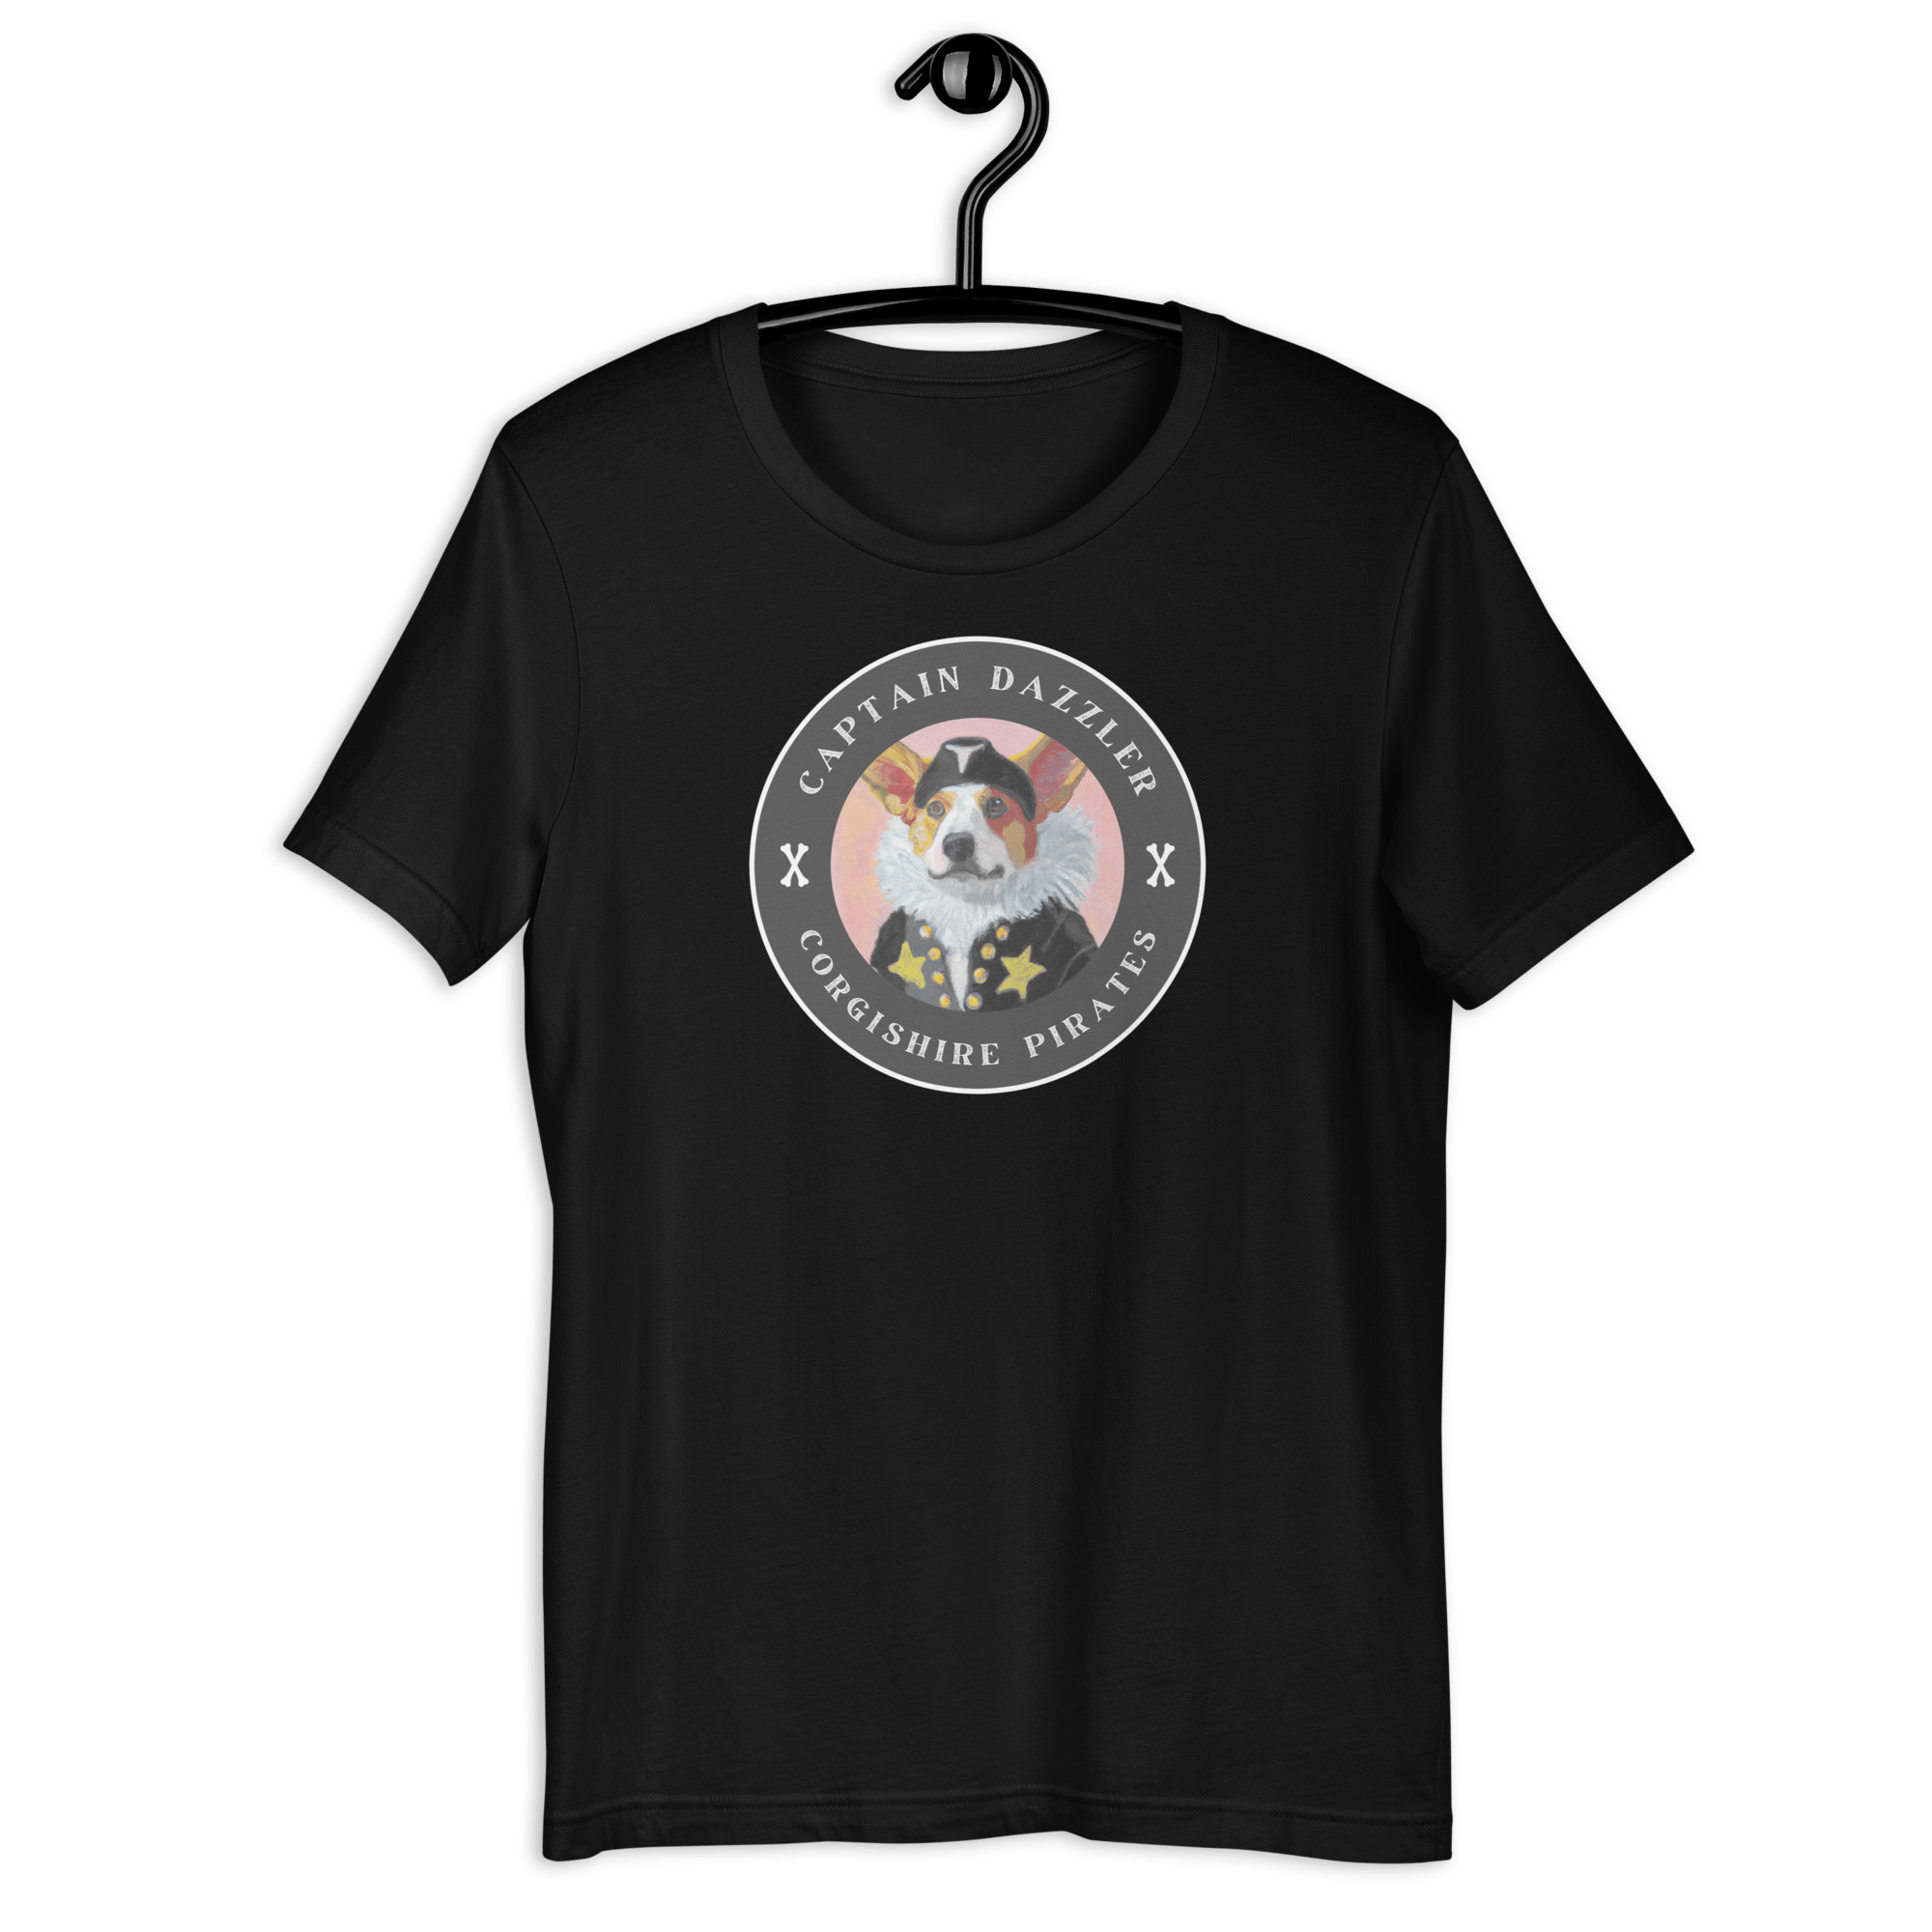 Captain Dazzler Corgishire Pirates T-shirt Black / S Shirts & Tops Jolly & Goode